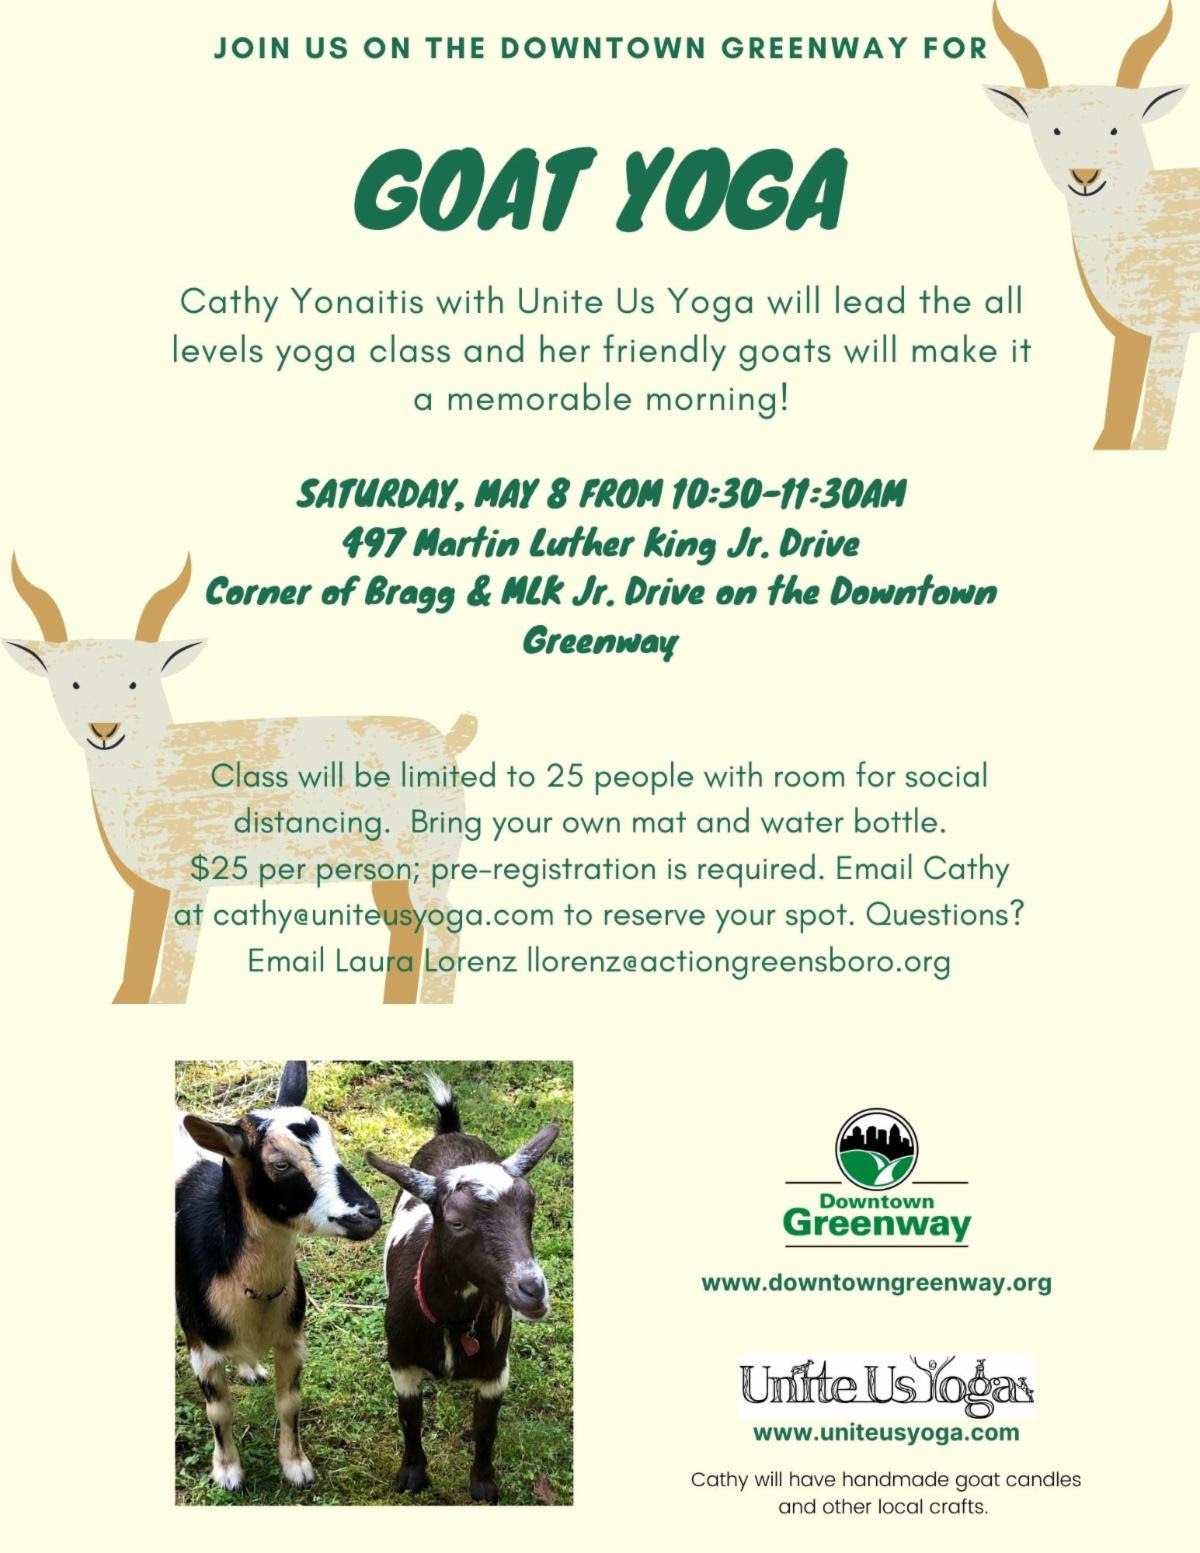 details on goat yoga class